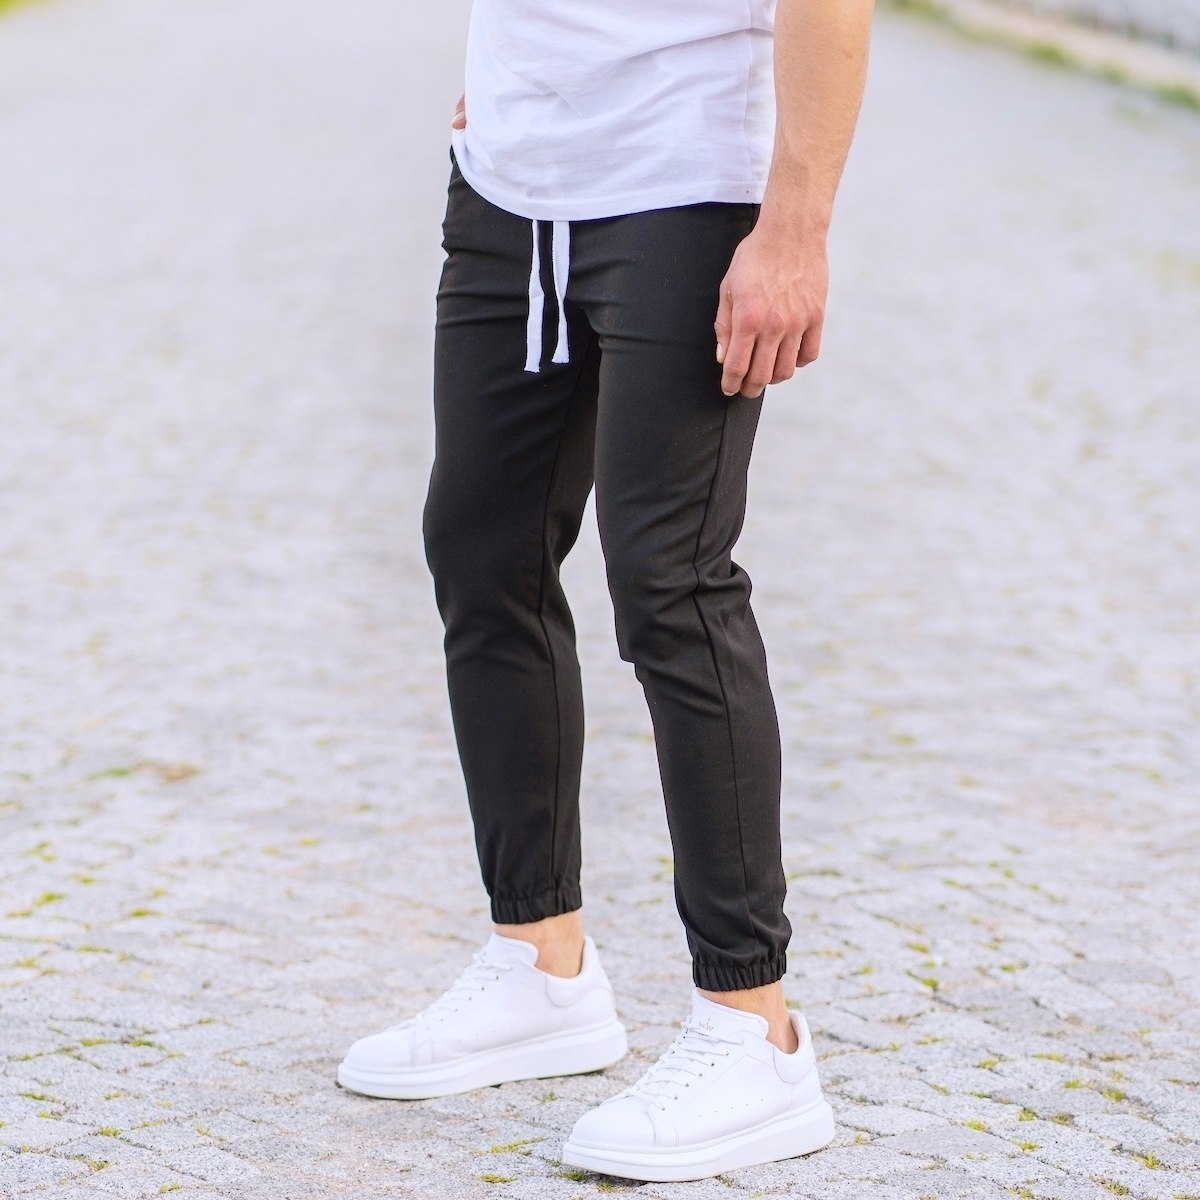 Men's Basic Elasticated Sport Pants Solid Black - 3